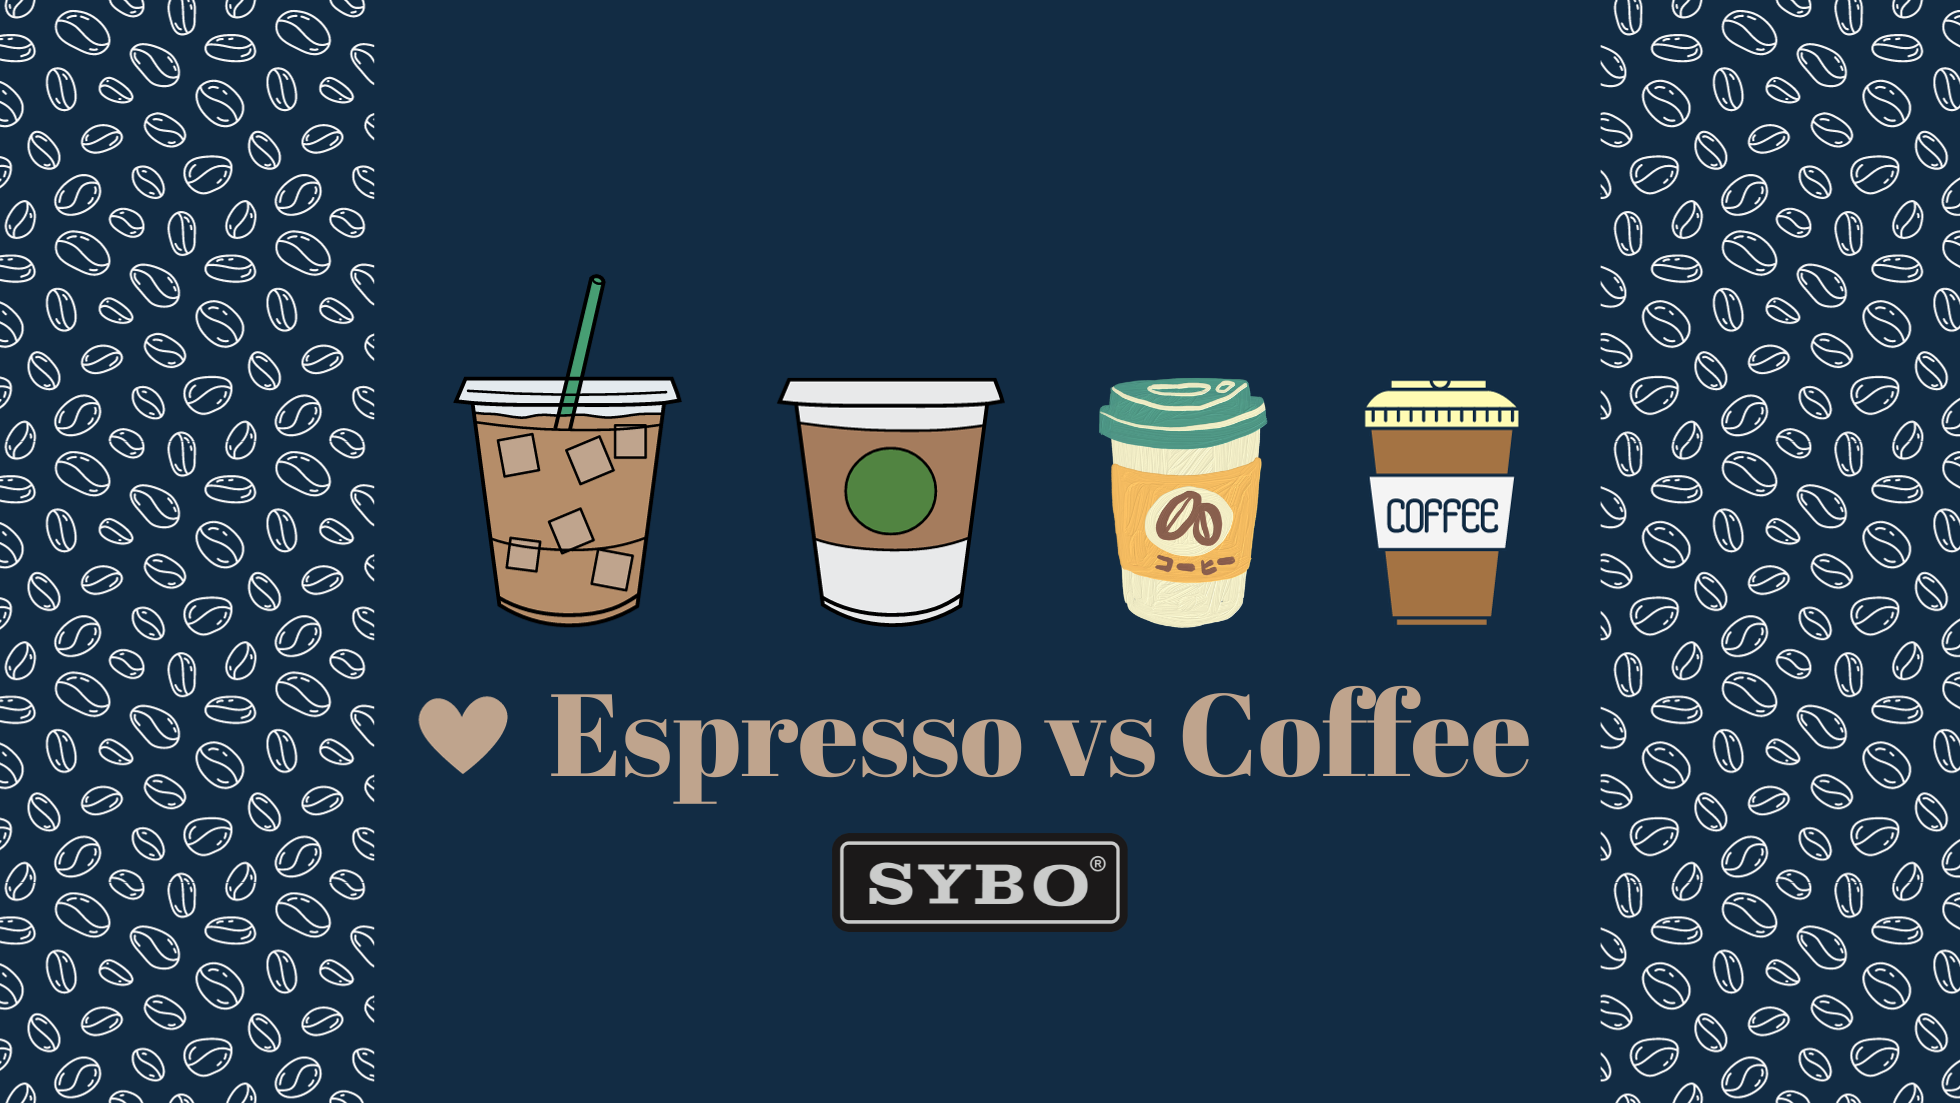 Espresso vs Coffee: A Caffeine Showdown